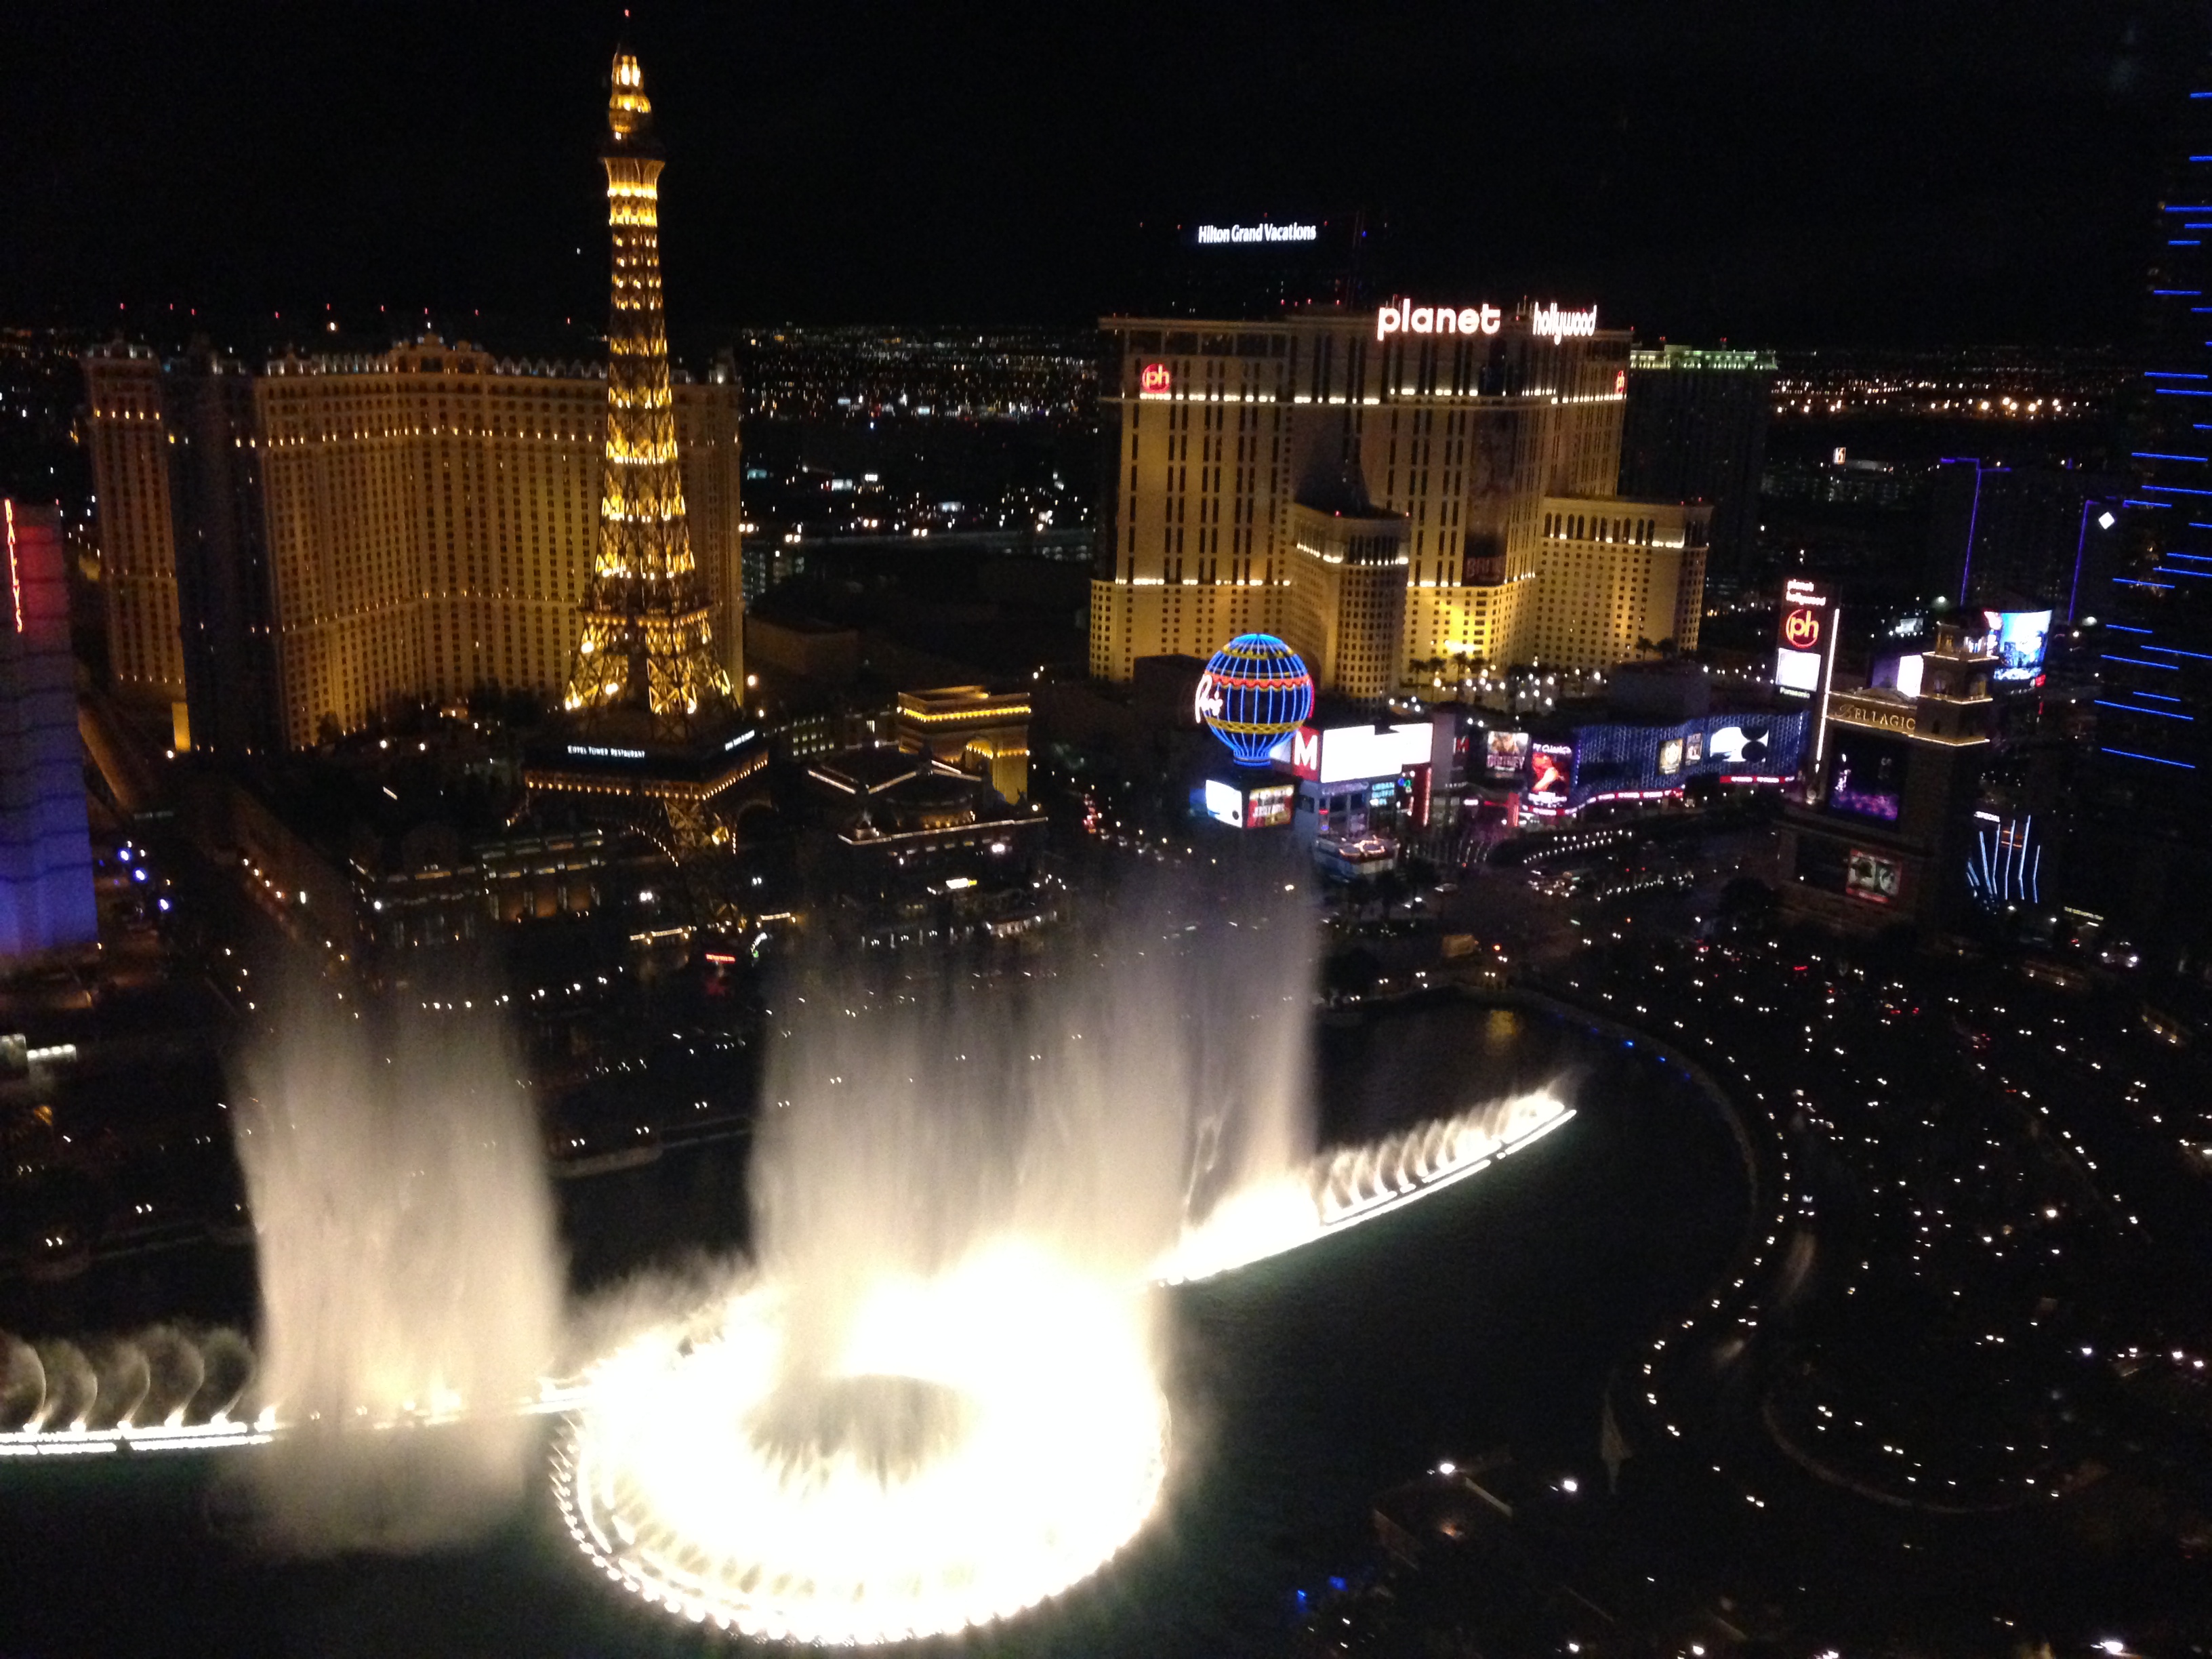 A room with a view - Paris Hotel - Las Vegas